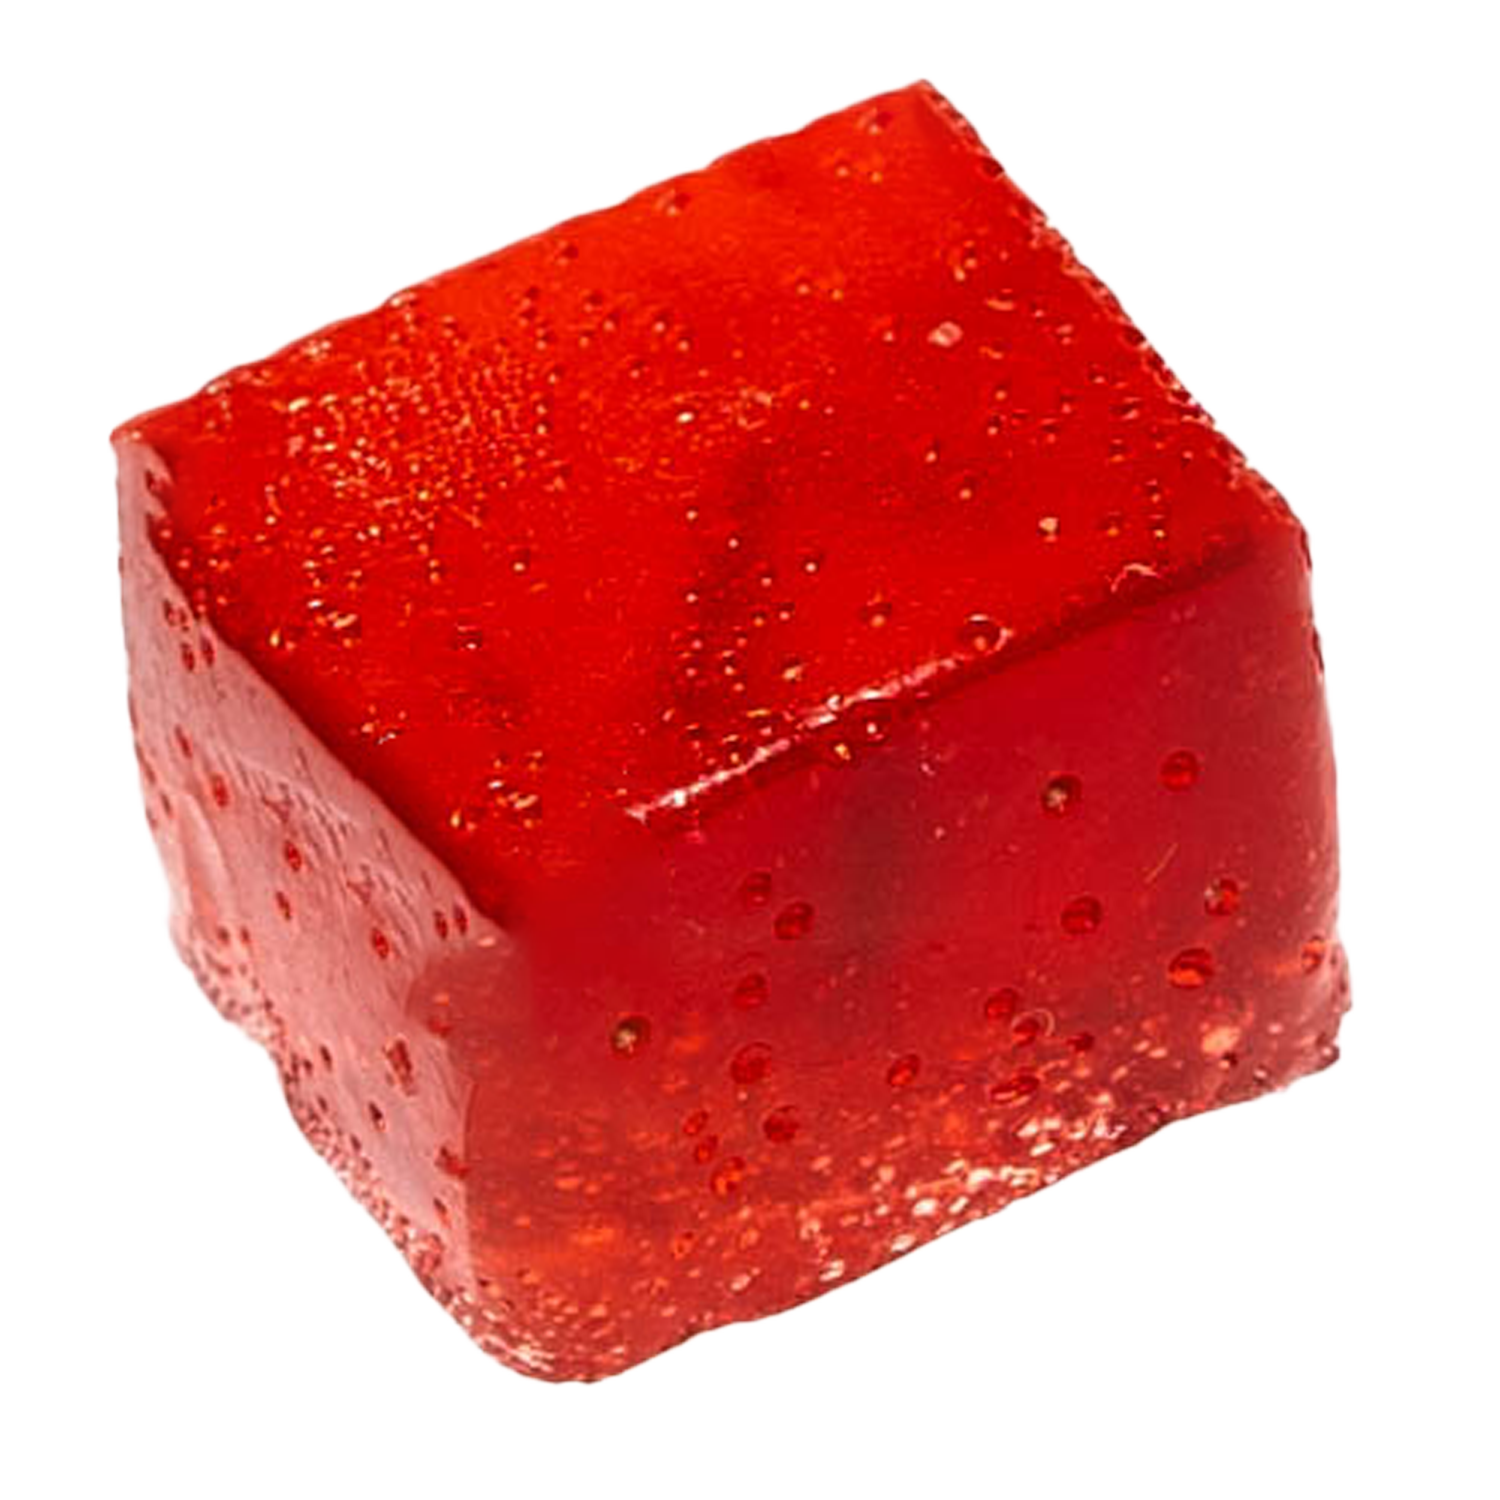 Red Energy CBD Cube